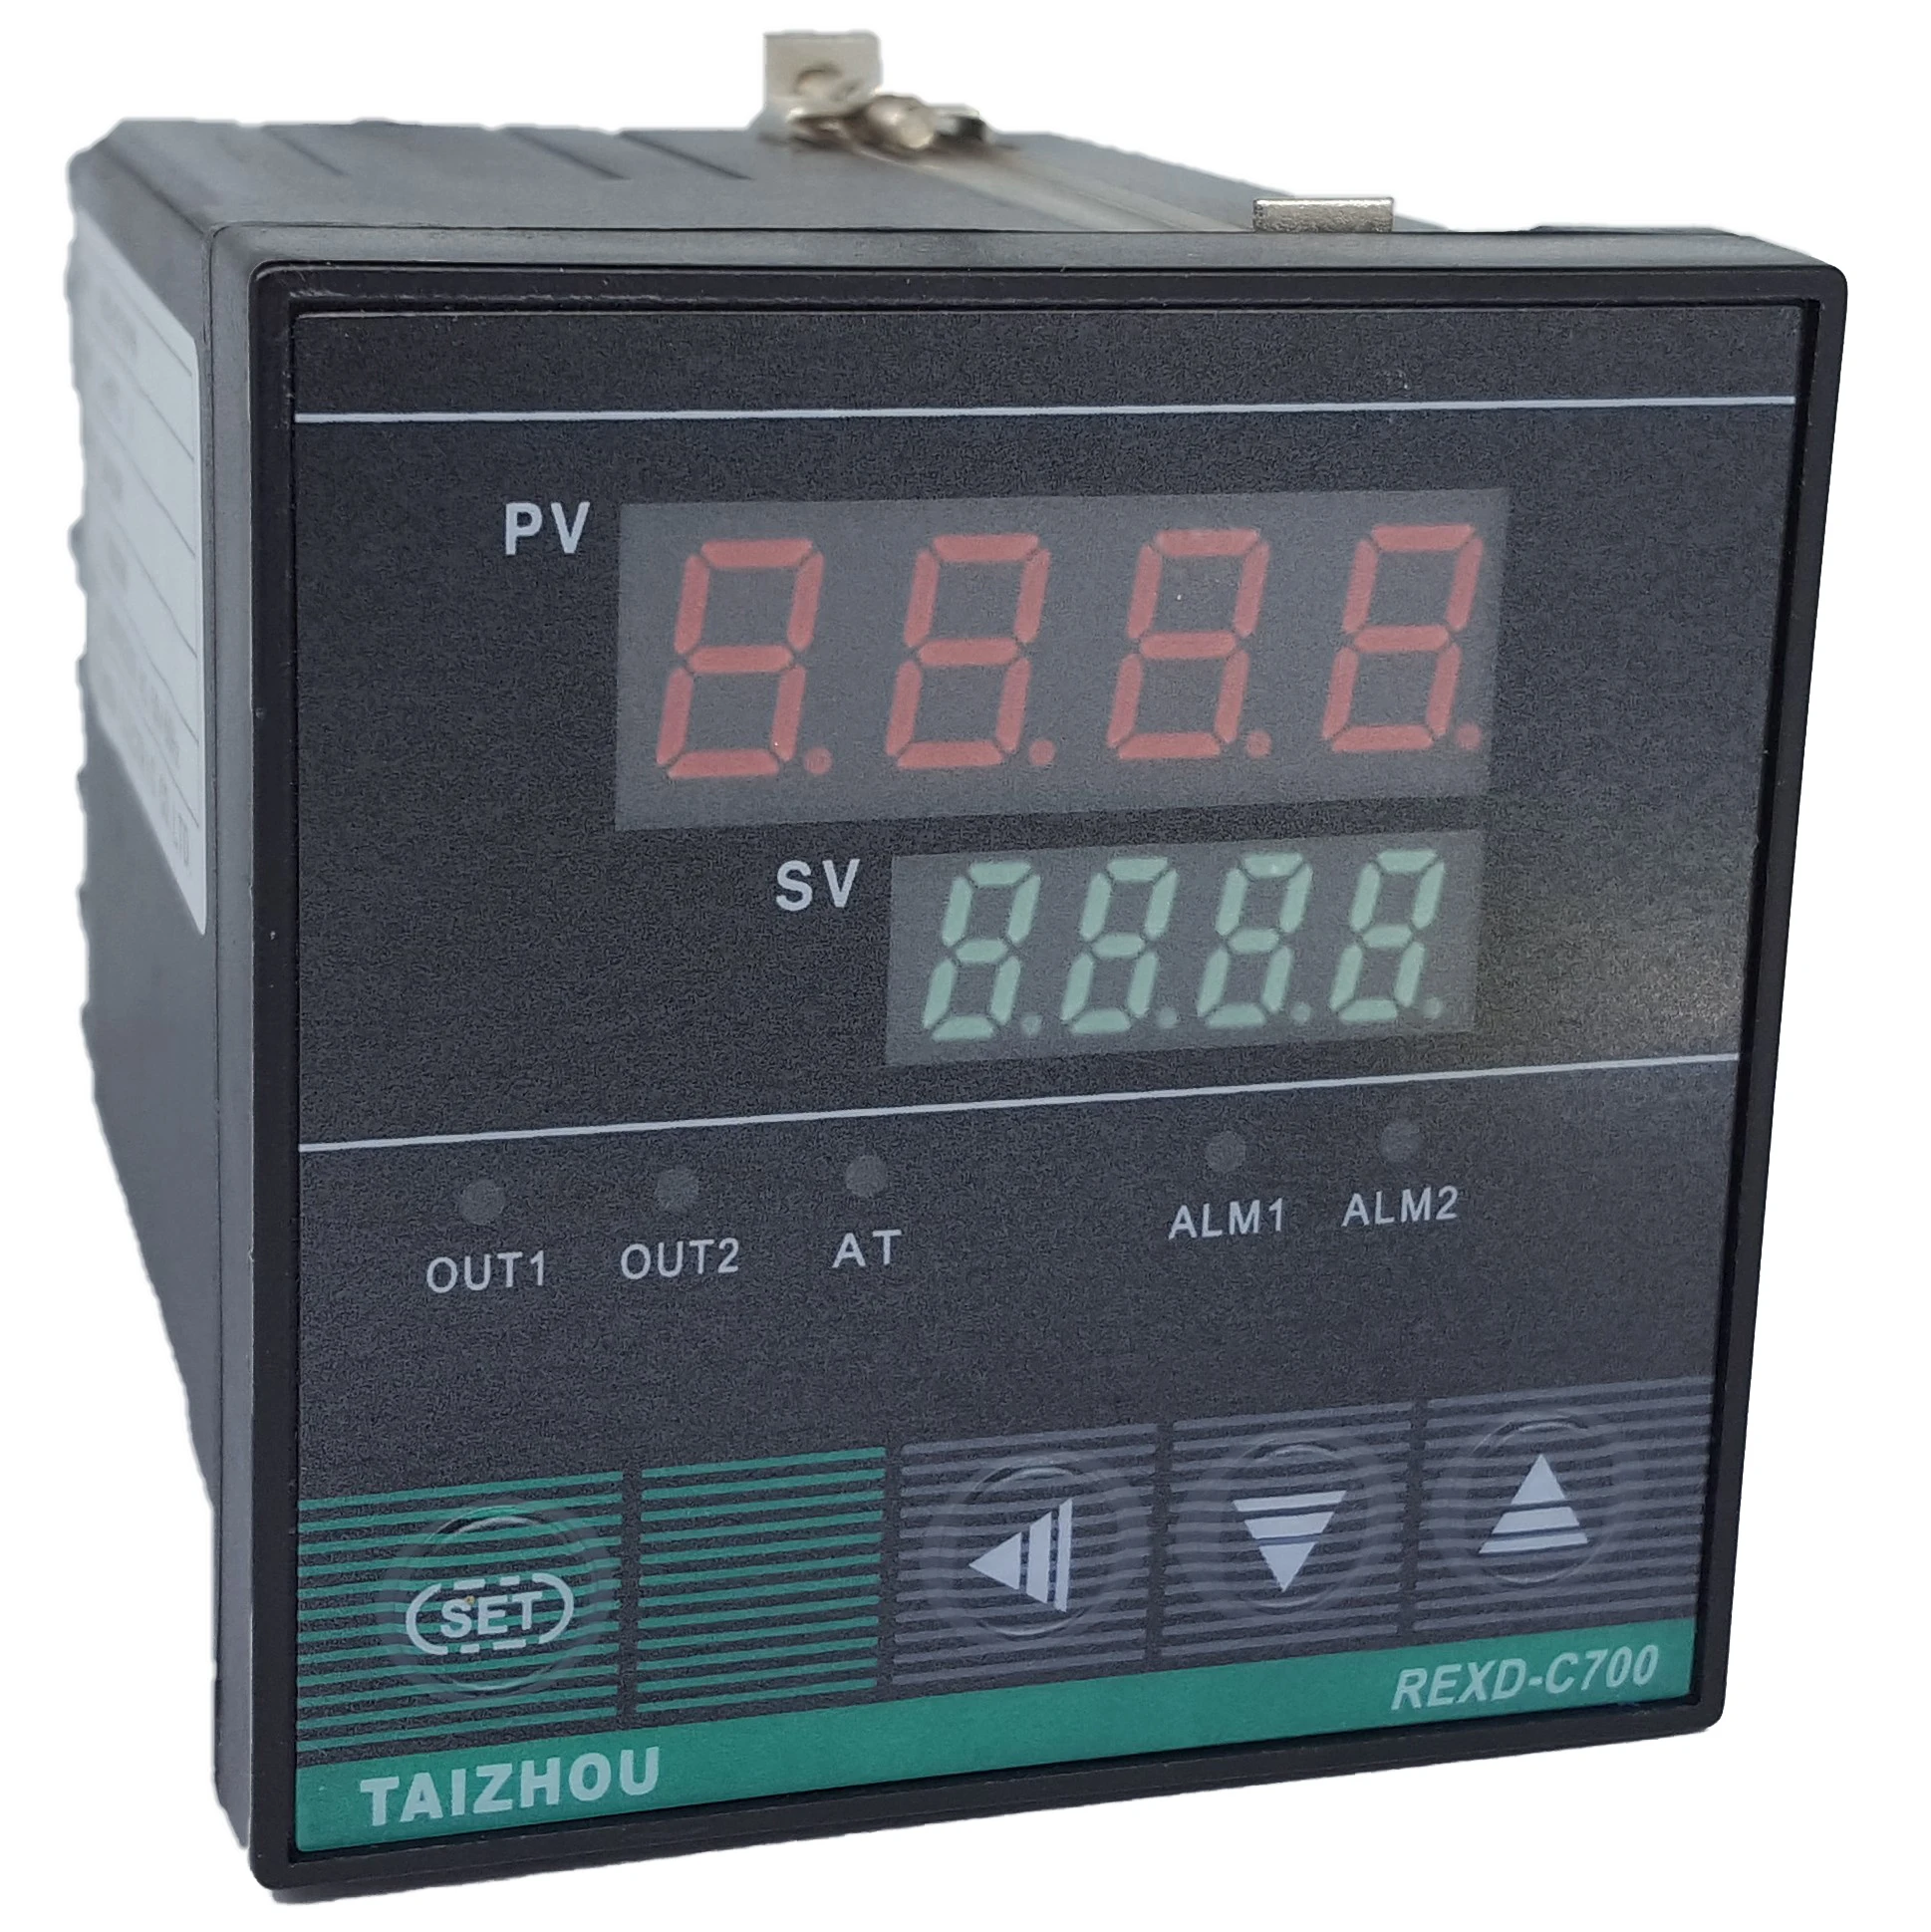 

TAIZHOU Electrical Appliance Instrument REXD-C7131 E 0-399 0-400 0-600 0-800 C700 Series Temperature Controller relay Oven-5pcs